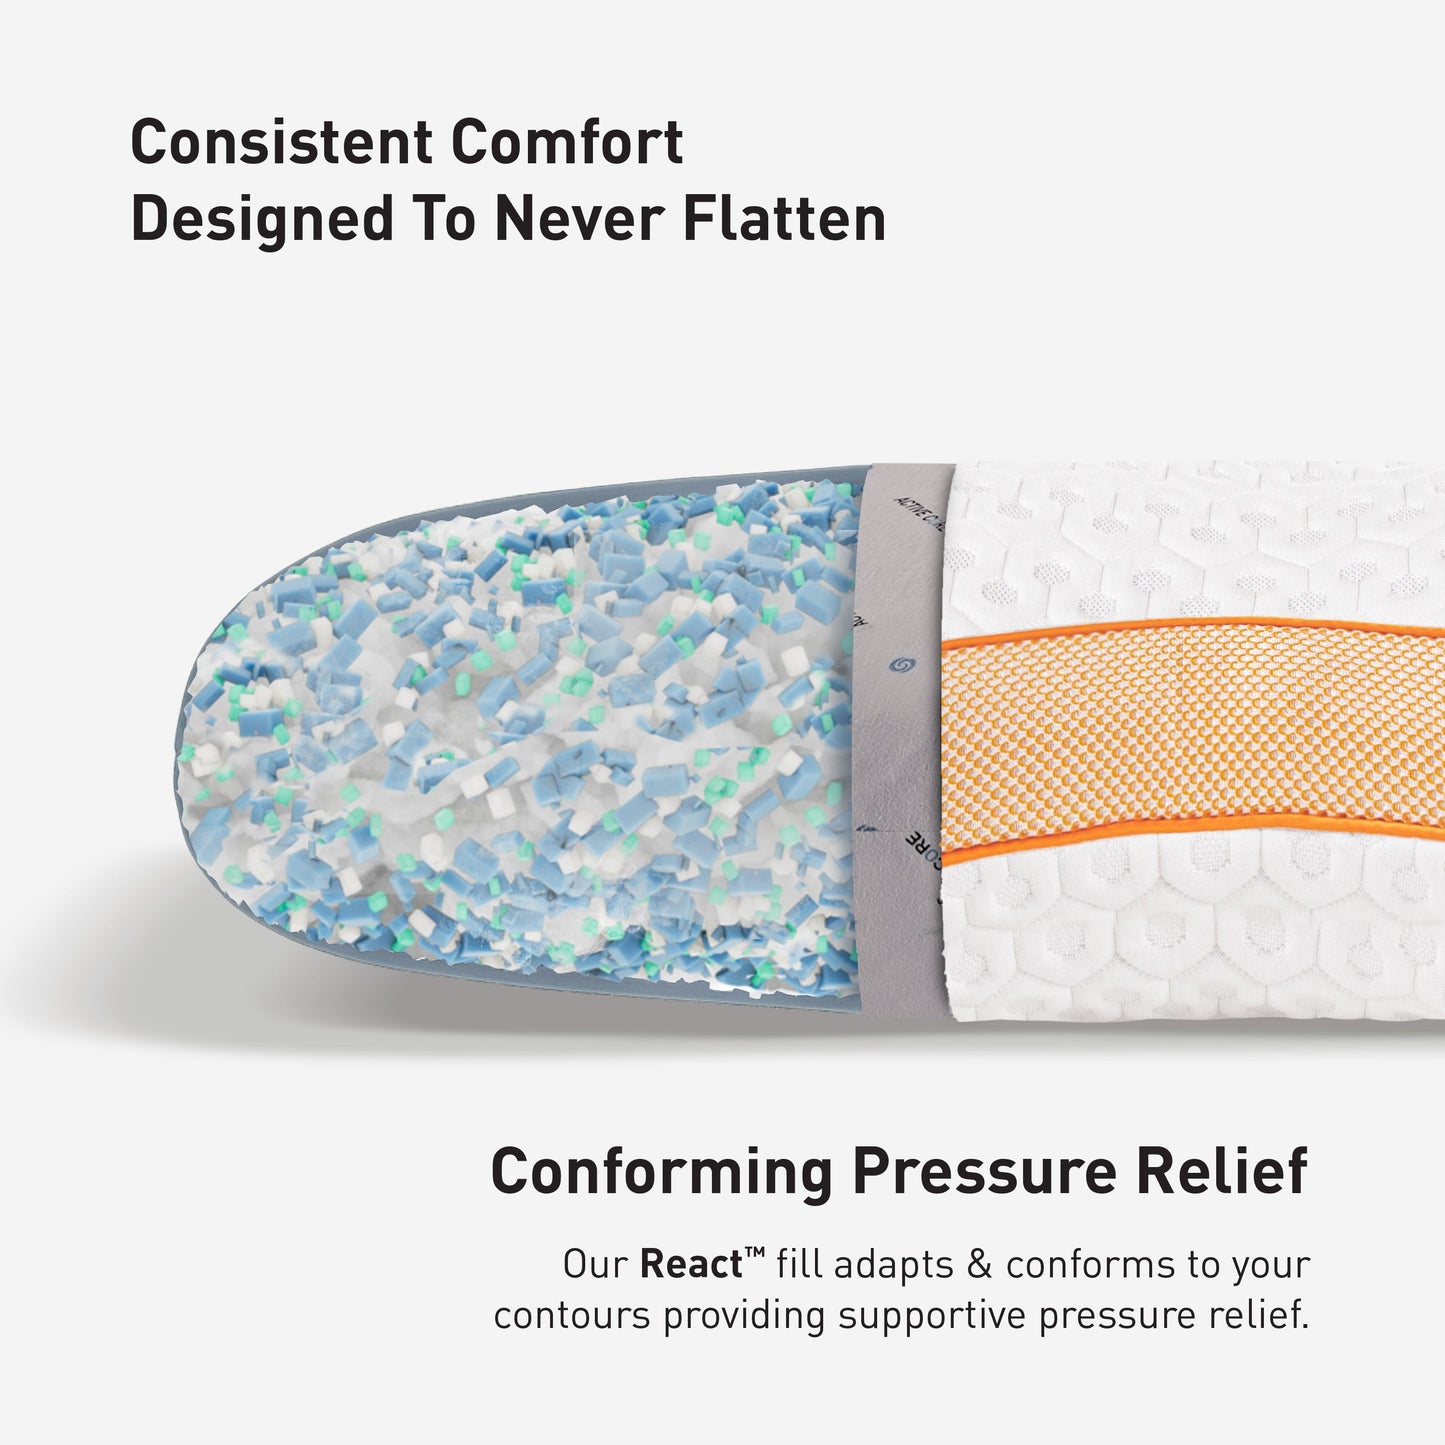 Bedgear Level Performance Pillow consistent comfort, designed to never flatten